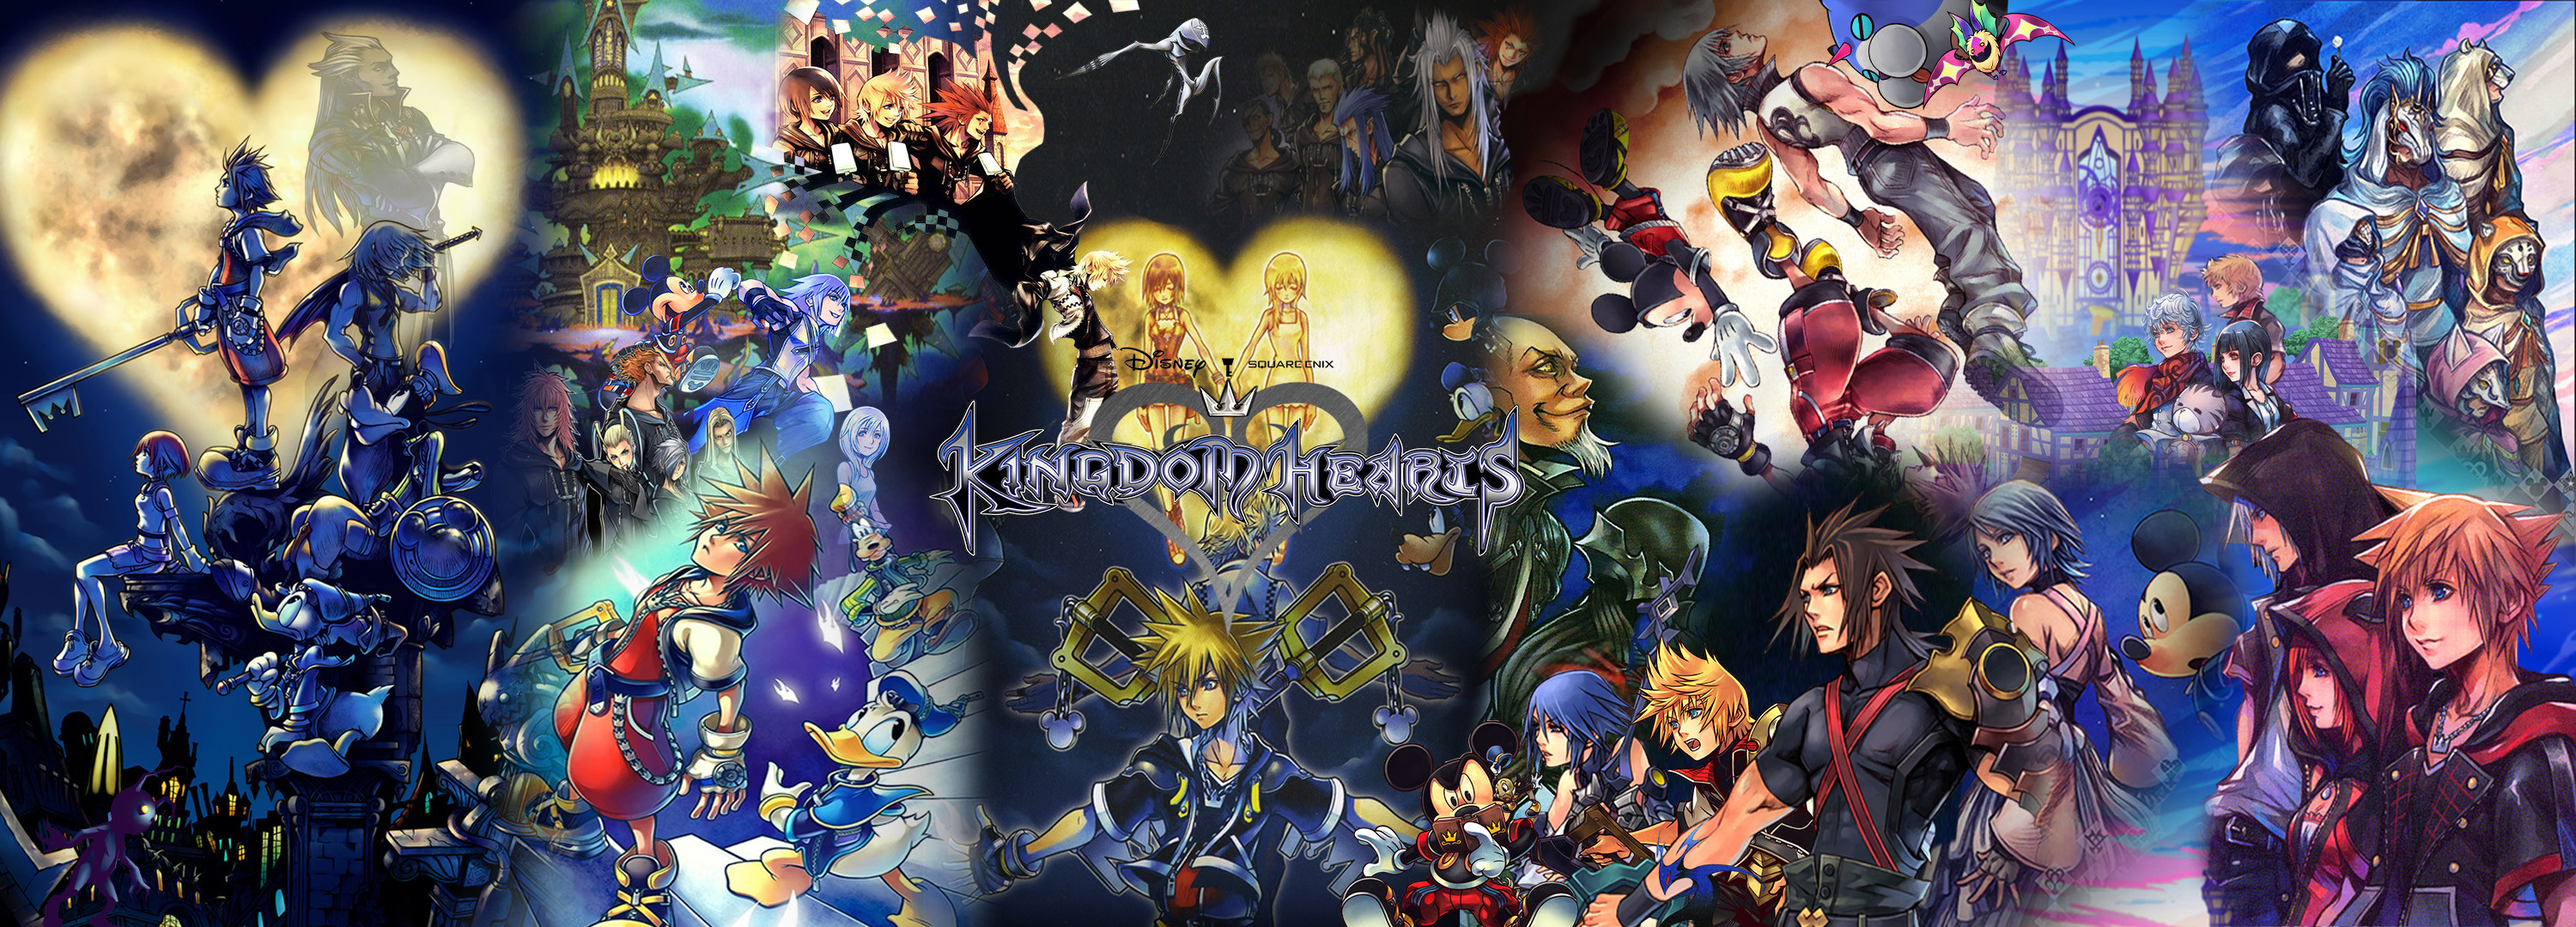 3000x1080 ... Kingdom Hearts Saga Banner/Wallpaper by The-Dark-Mamba-995